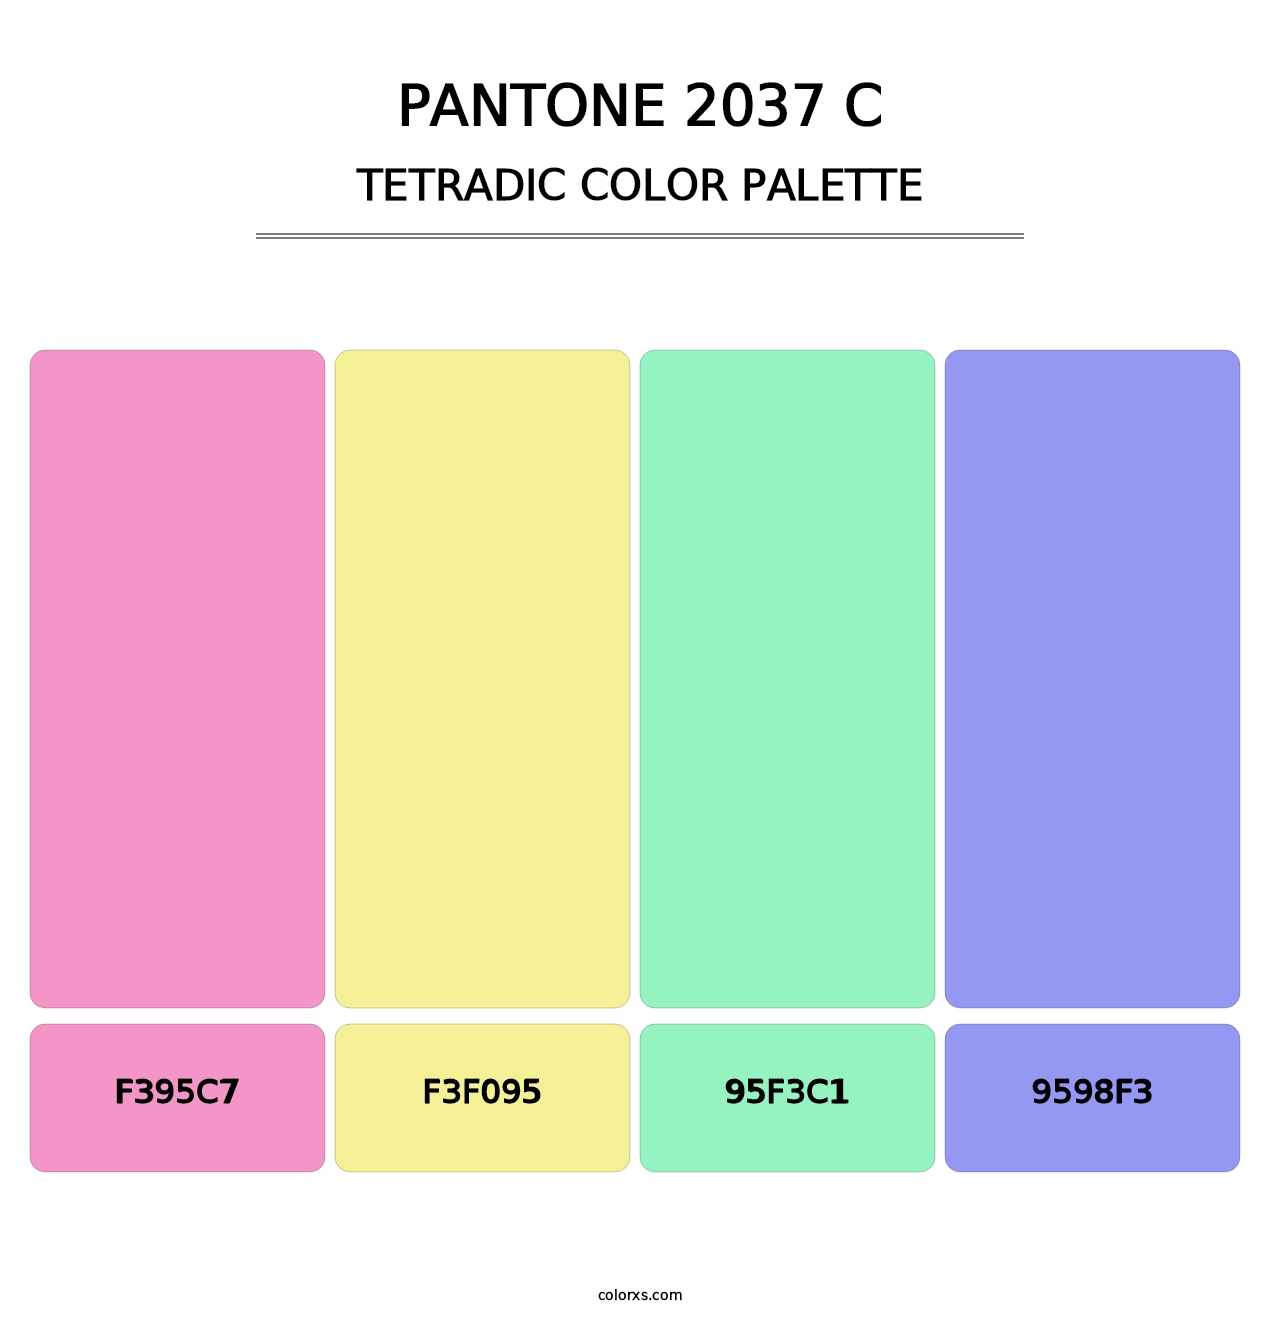 PANTONE 2037 C - Tetradic Color Palette